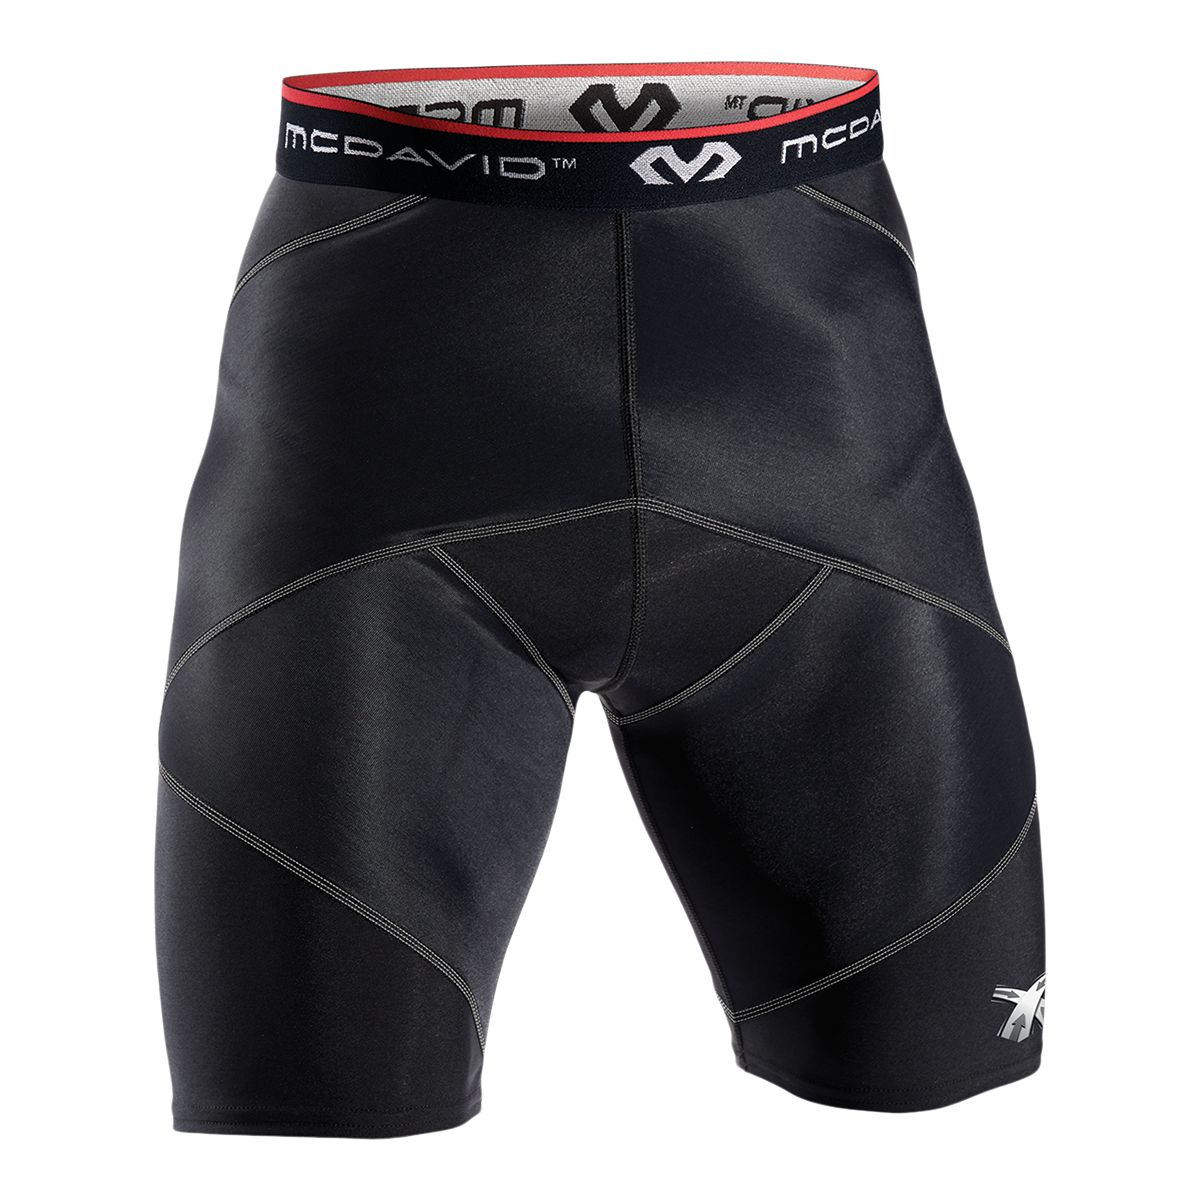 McDavid Men's Cross Compression Shorts With Hip Spica | Sportchek